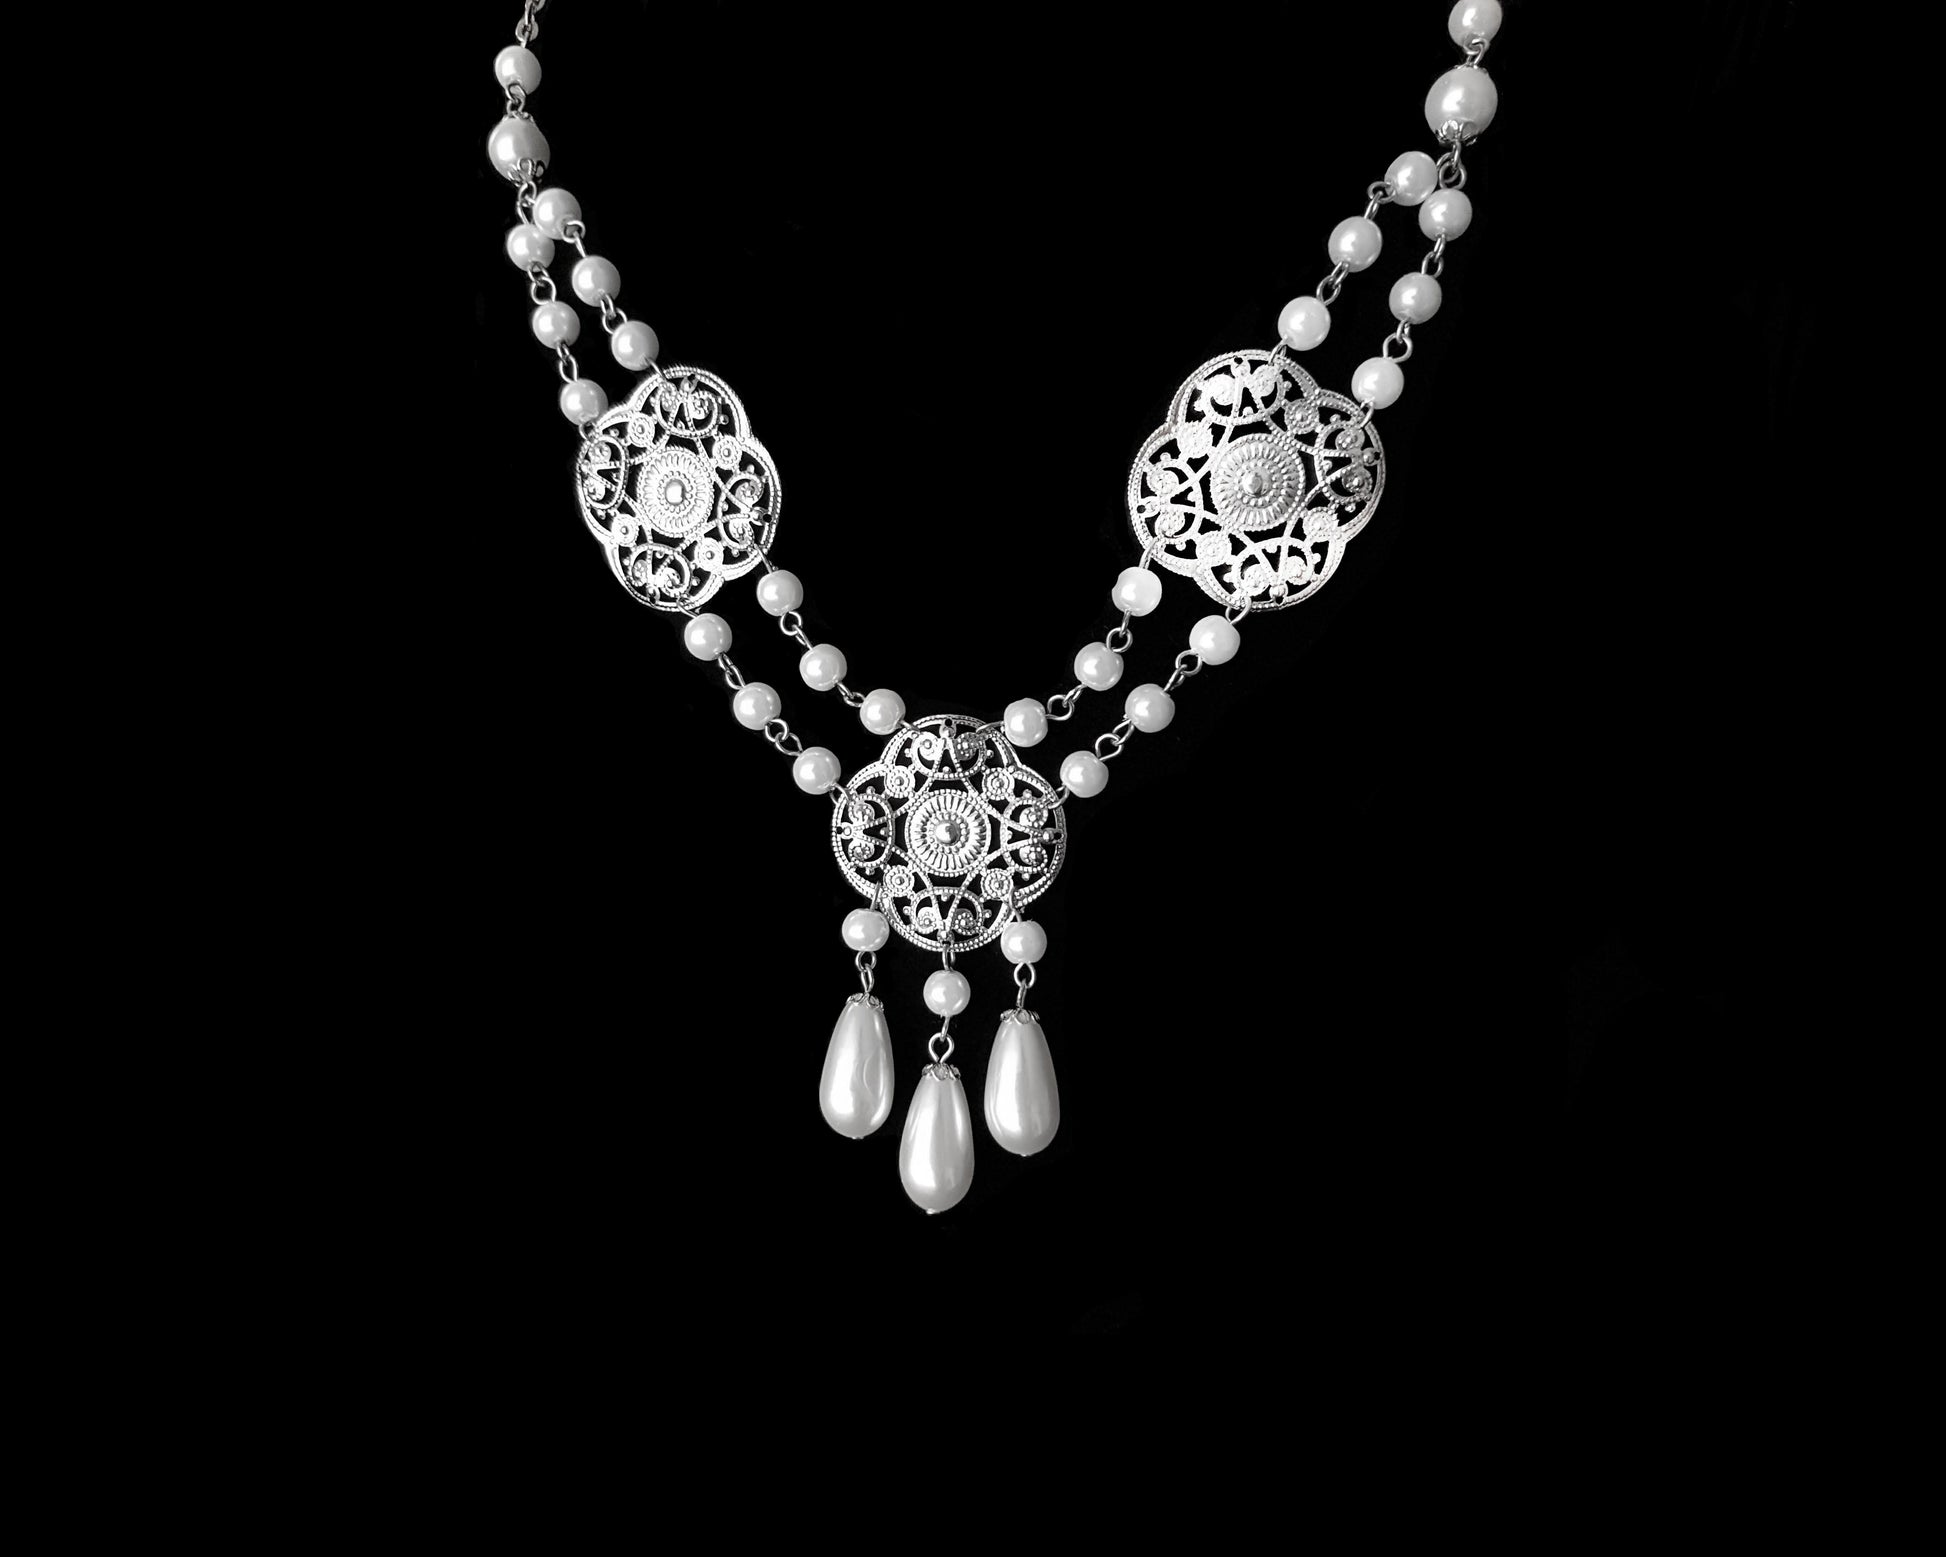 Edwardian Style Pearl Festoon Necklace-White Pearls-White Gold Finish